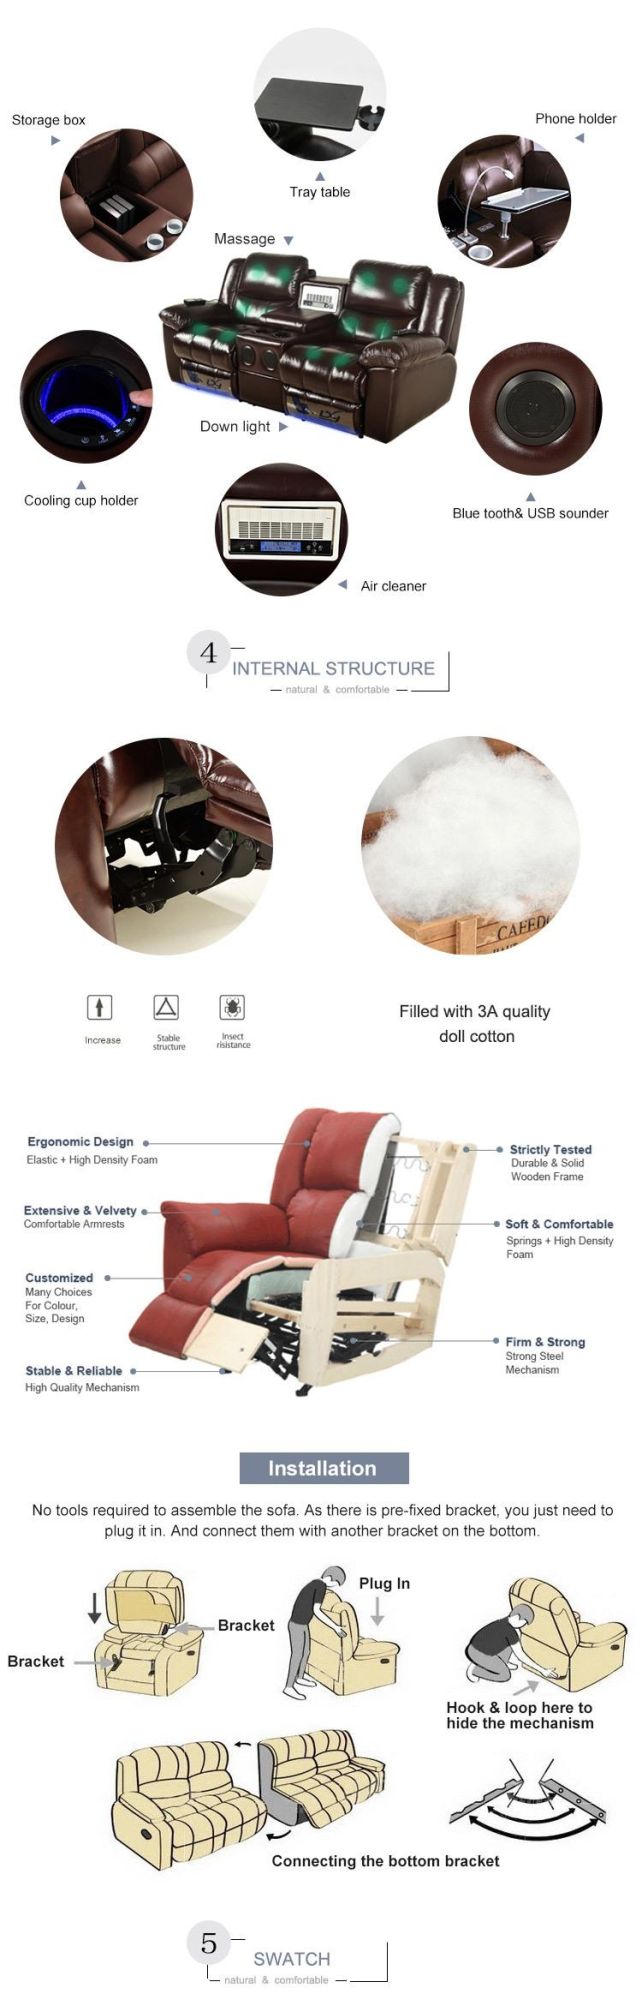 Modern Designsleisure Bonded Leather Home Furniture Genuine Leather Corner Sofa